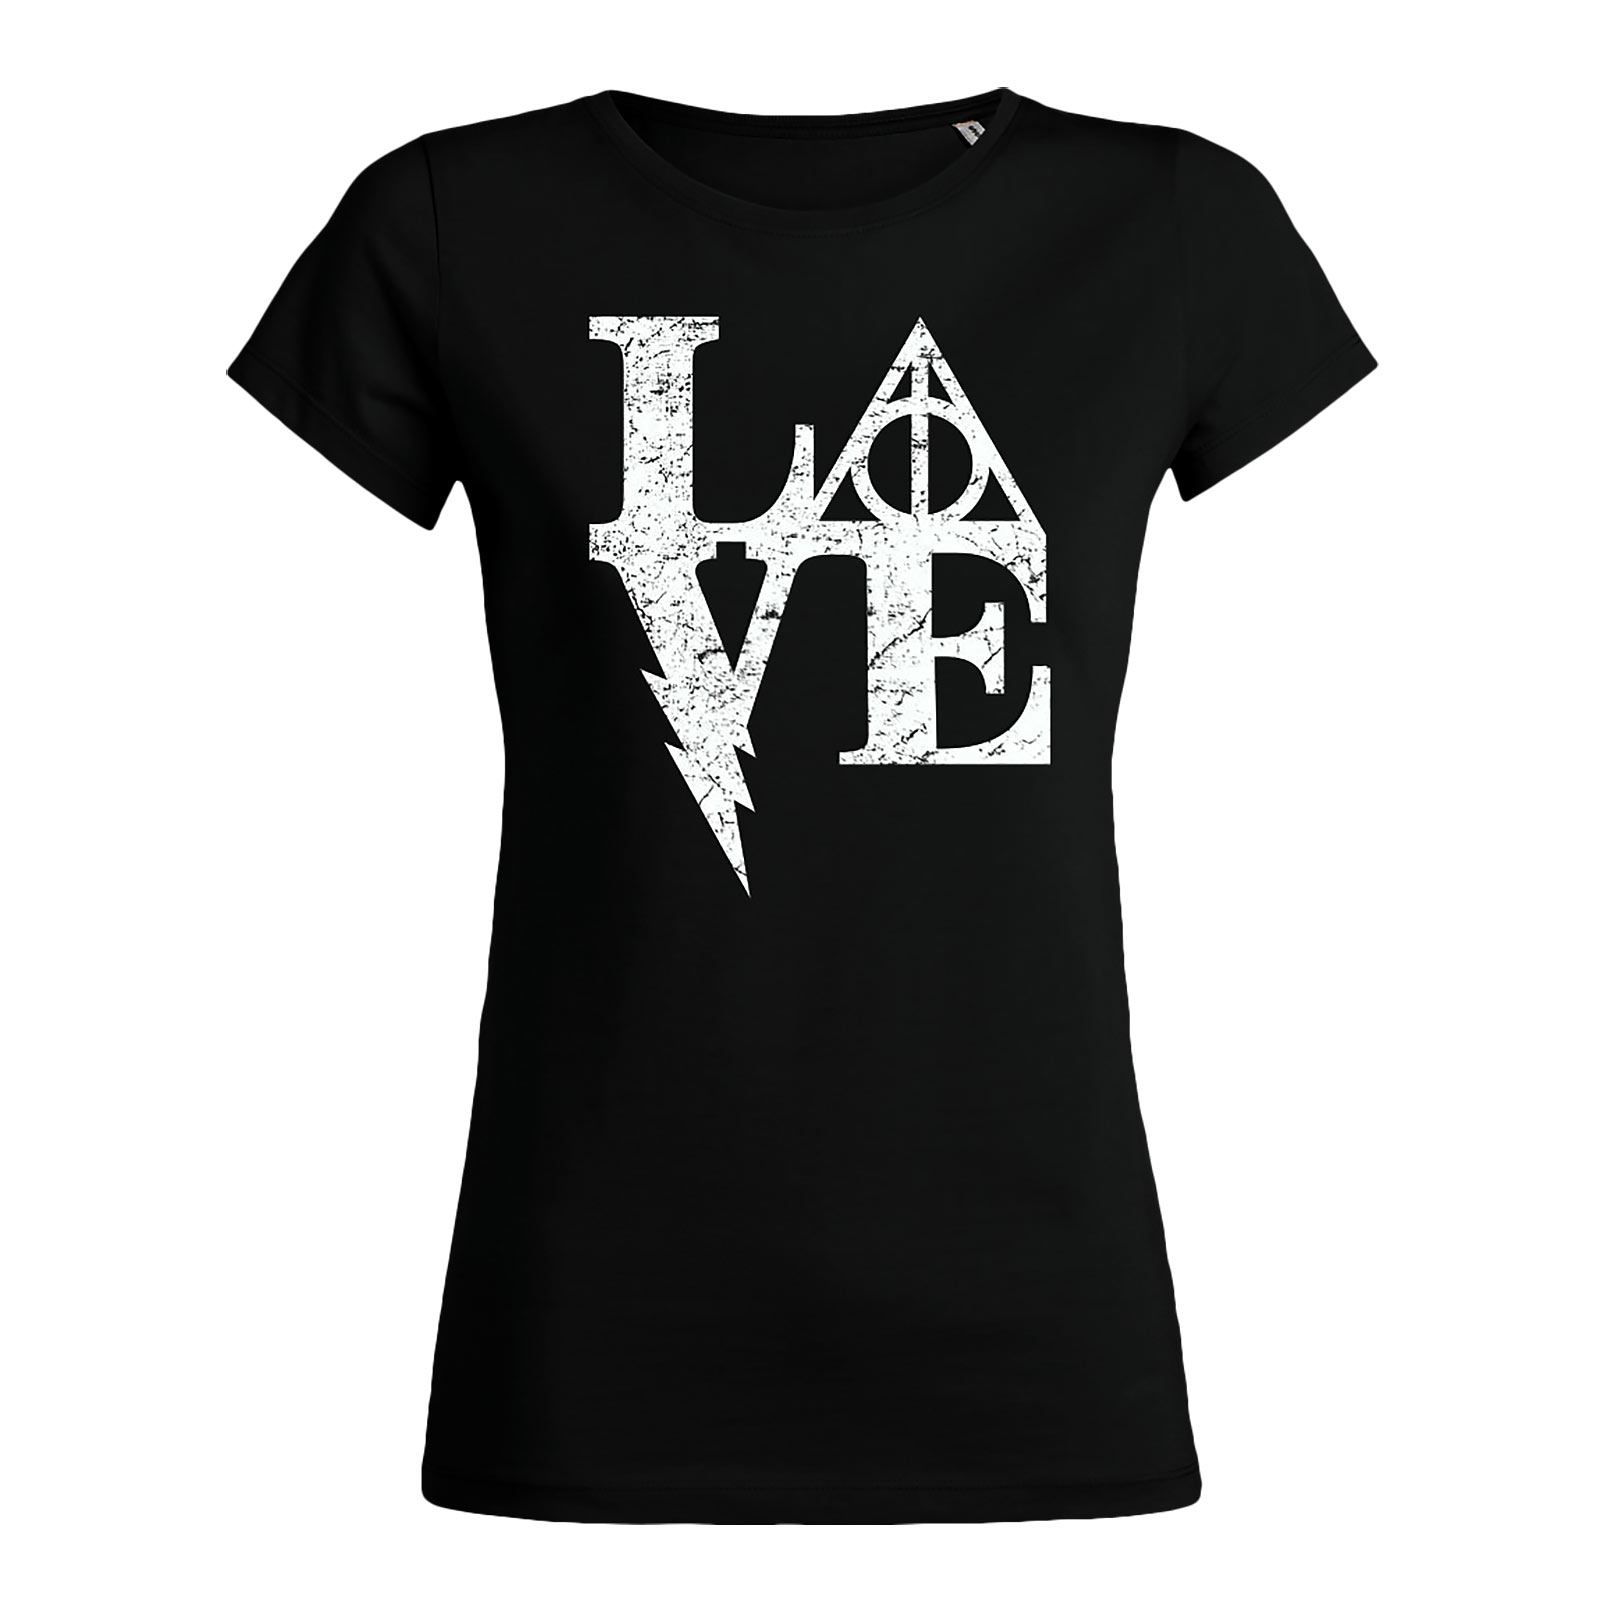 Wizarding Love T-Shirt Women for Harry Potter Fans